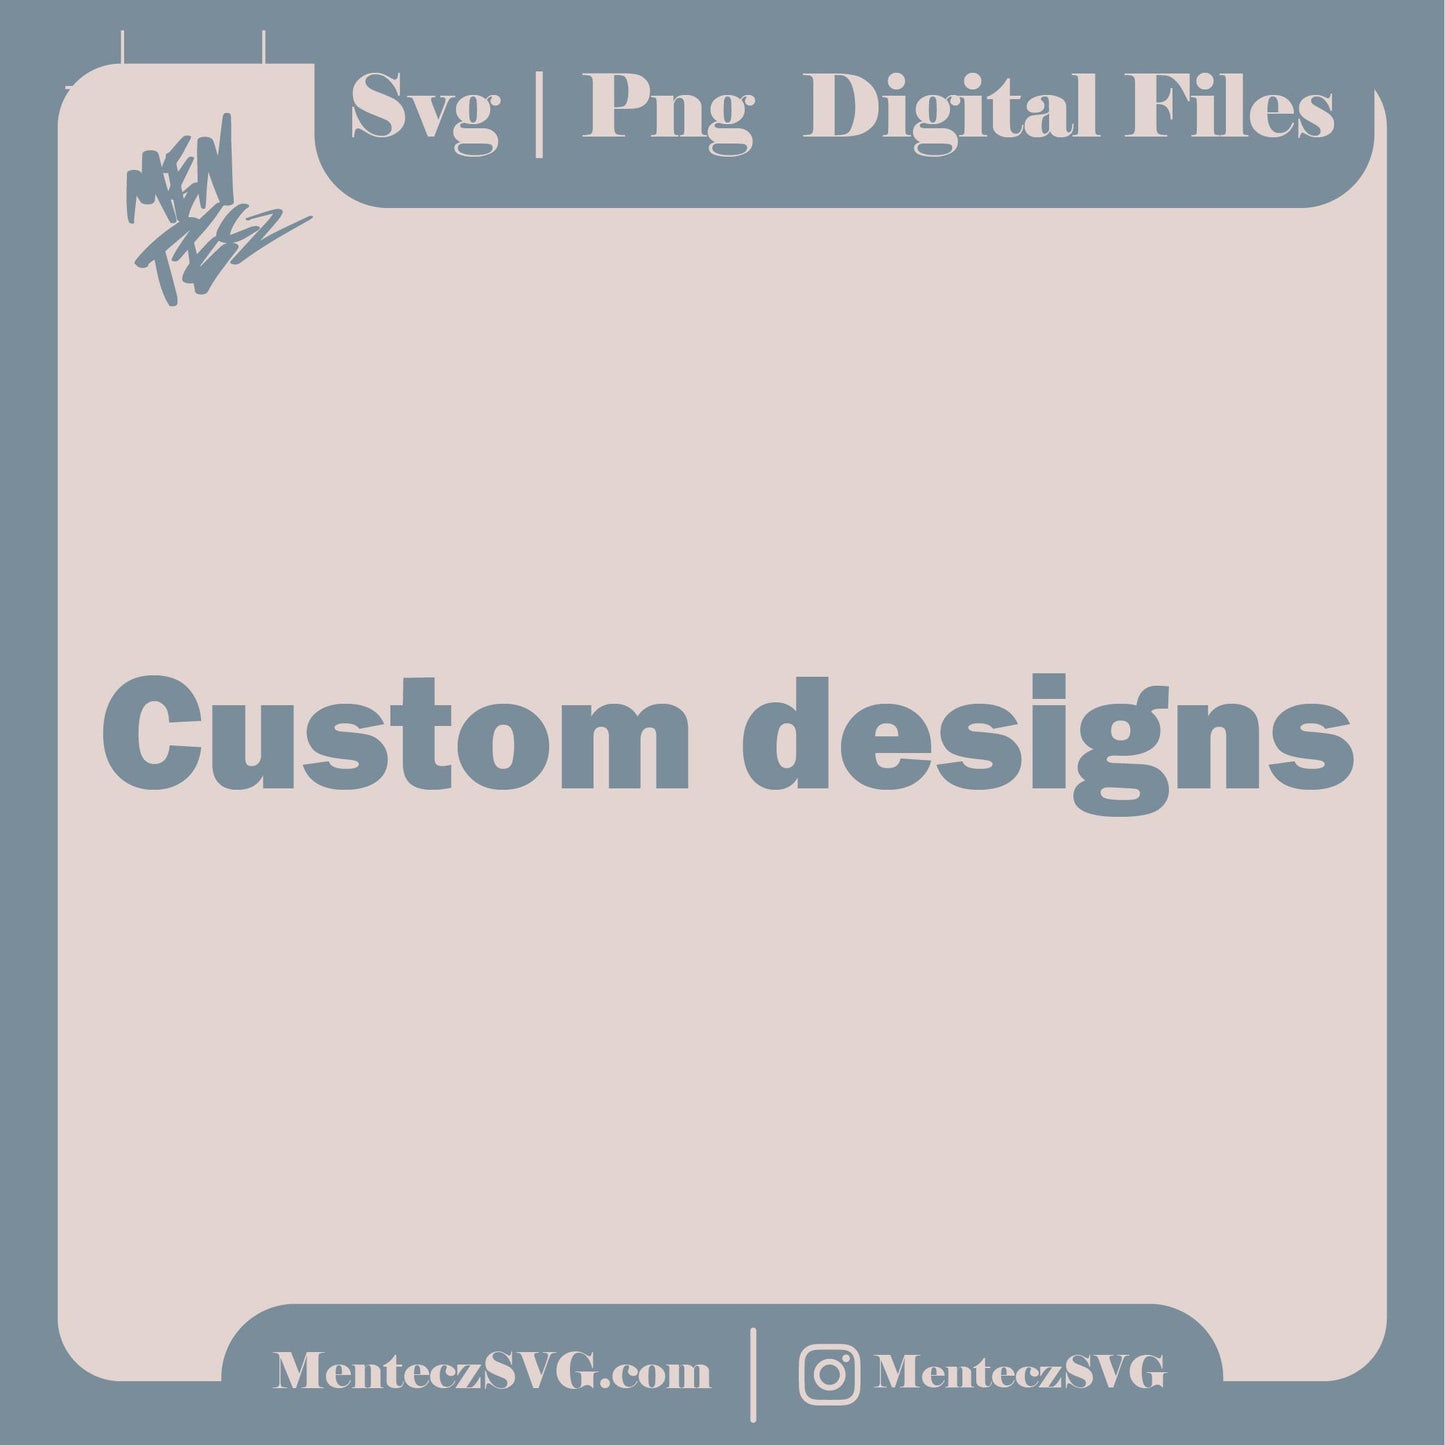 Custom Designs, SVG, PNG and JPG